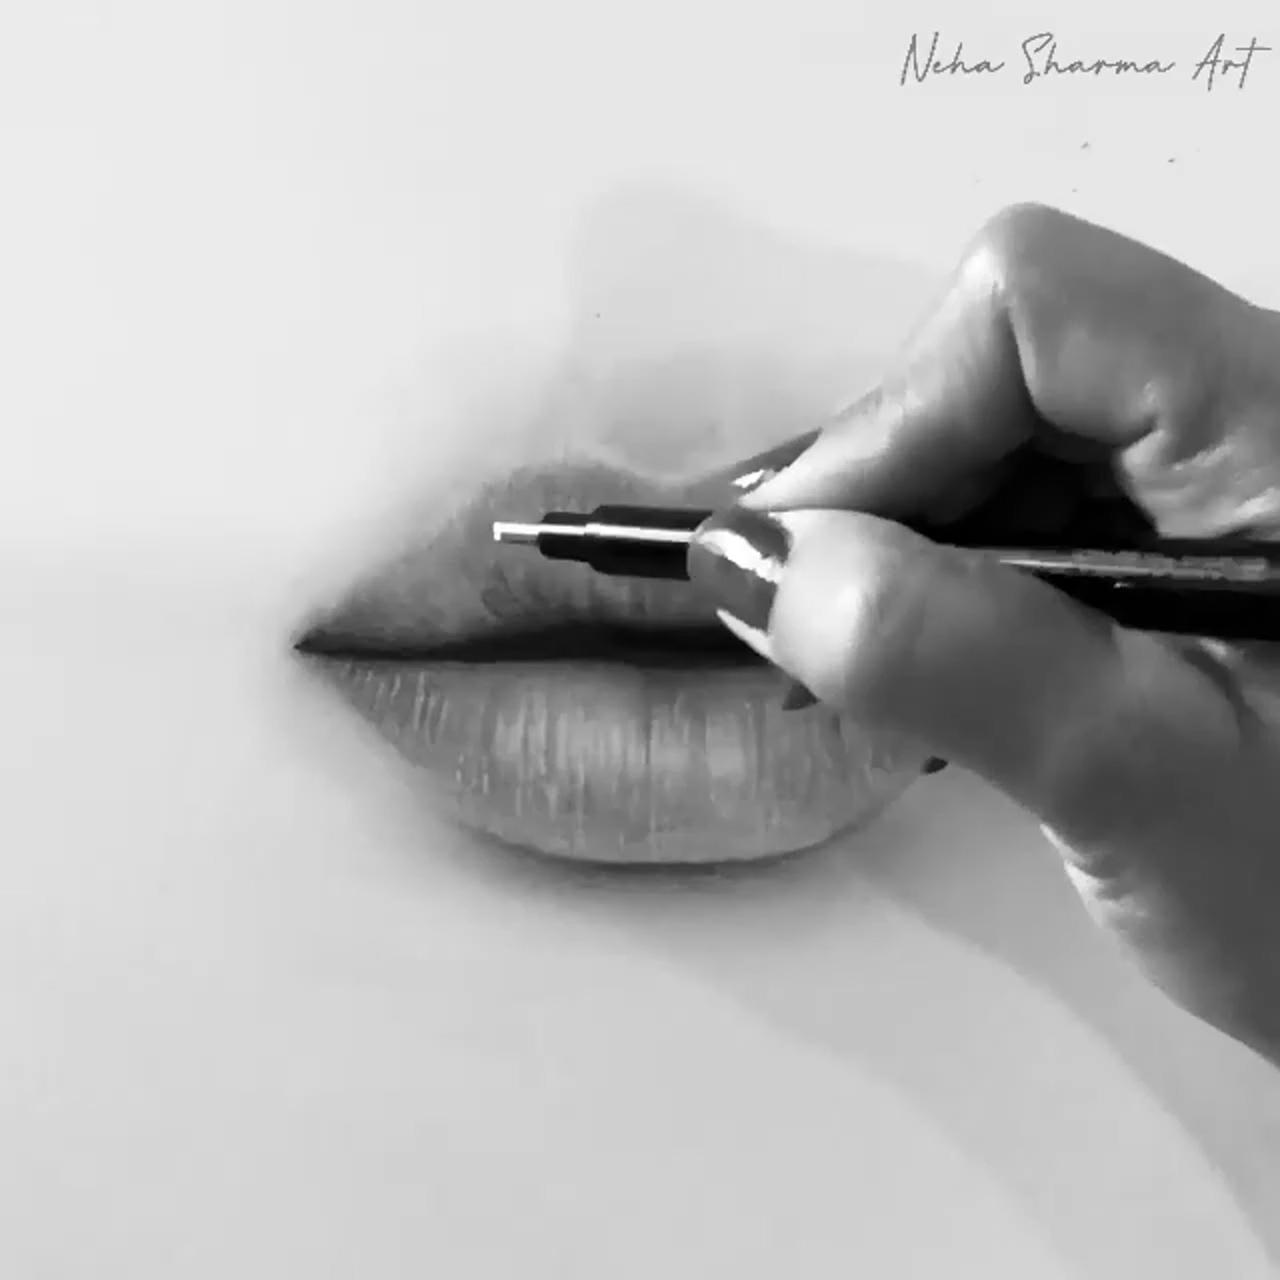 Lip pencil drawing charcoal tutorial art by nehasharma_art | pencil art love